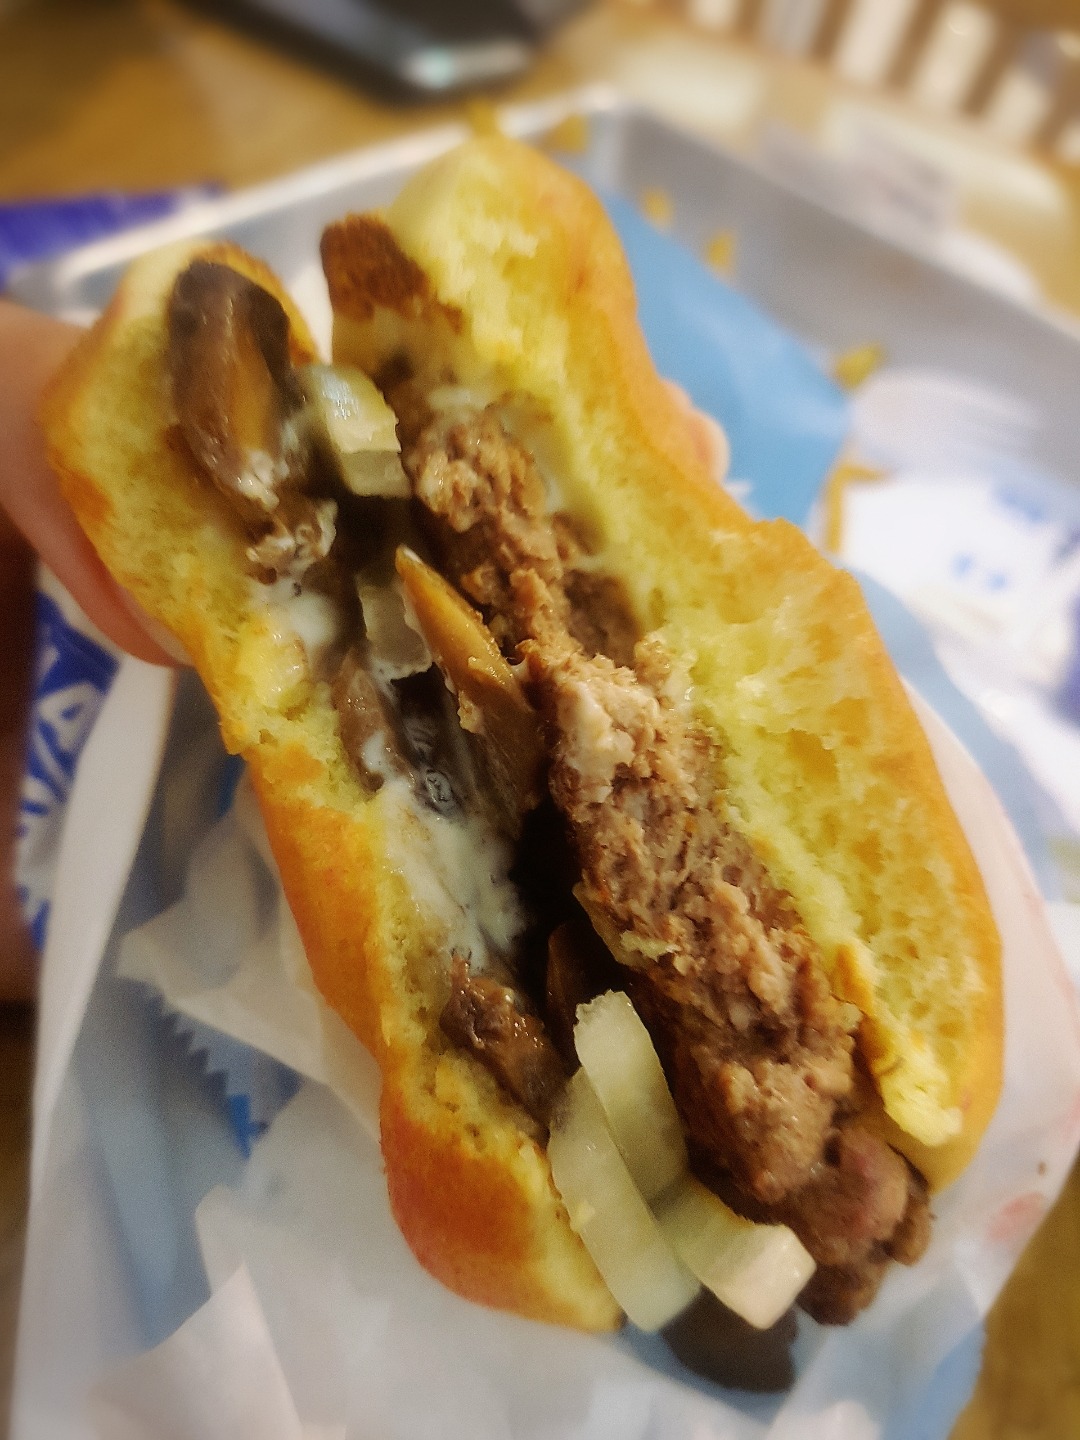 Mushroom burger @ Wafflemeister - Bahrain